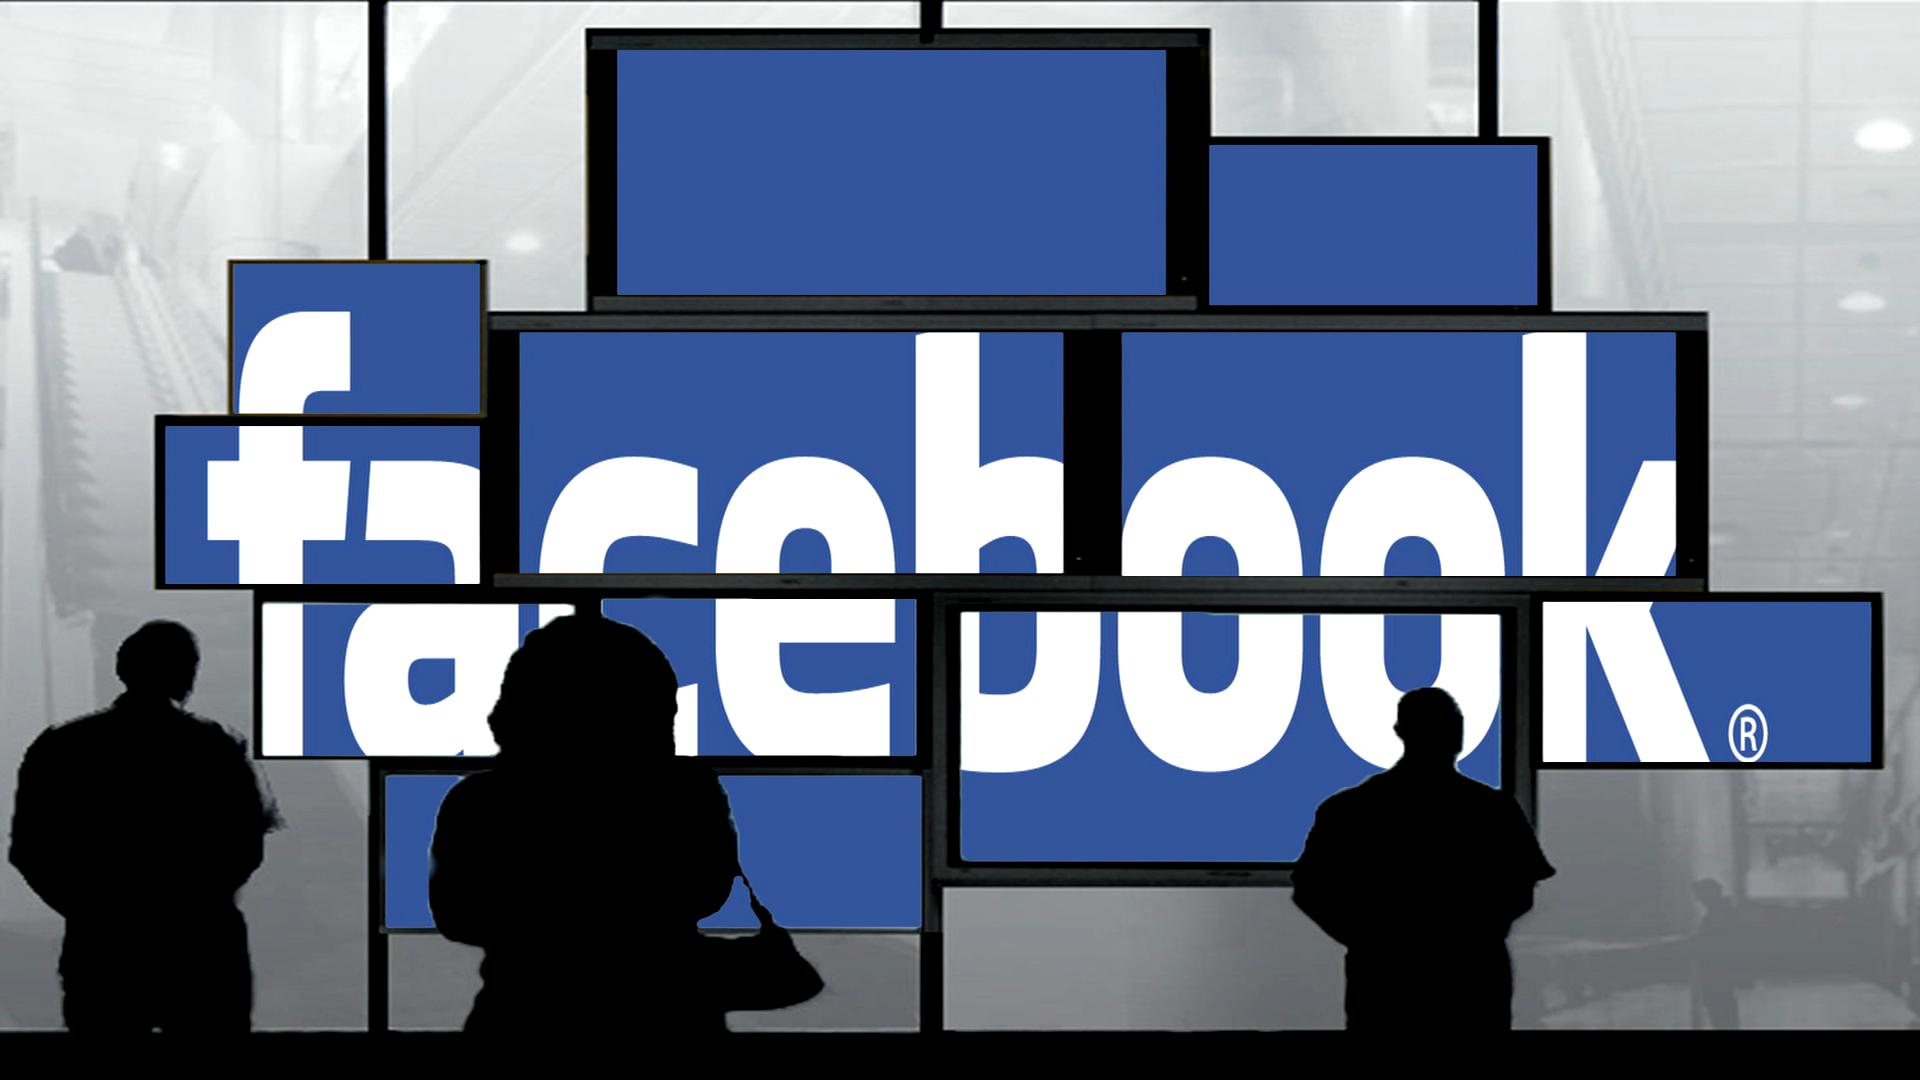 فیس بوک احتمالا در حال تست يک فيد خبري جديد و متفاوت است + عکس